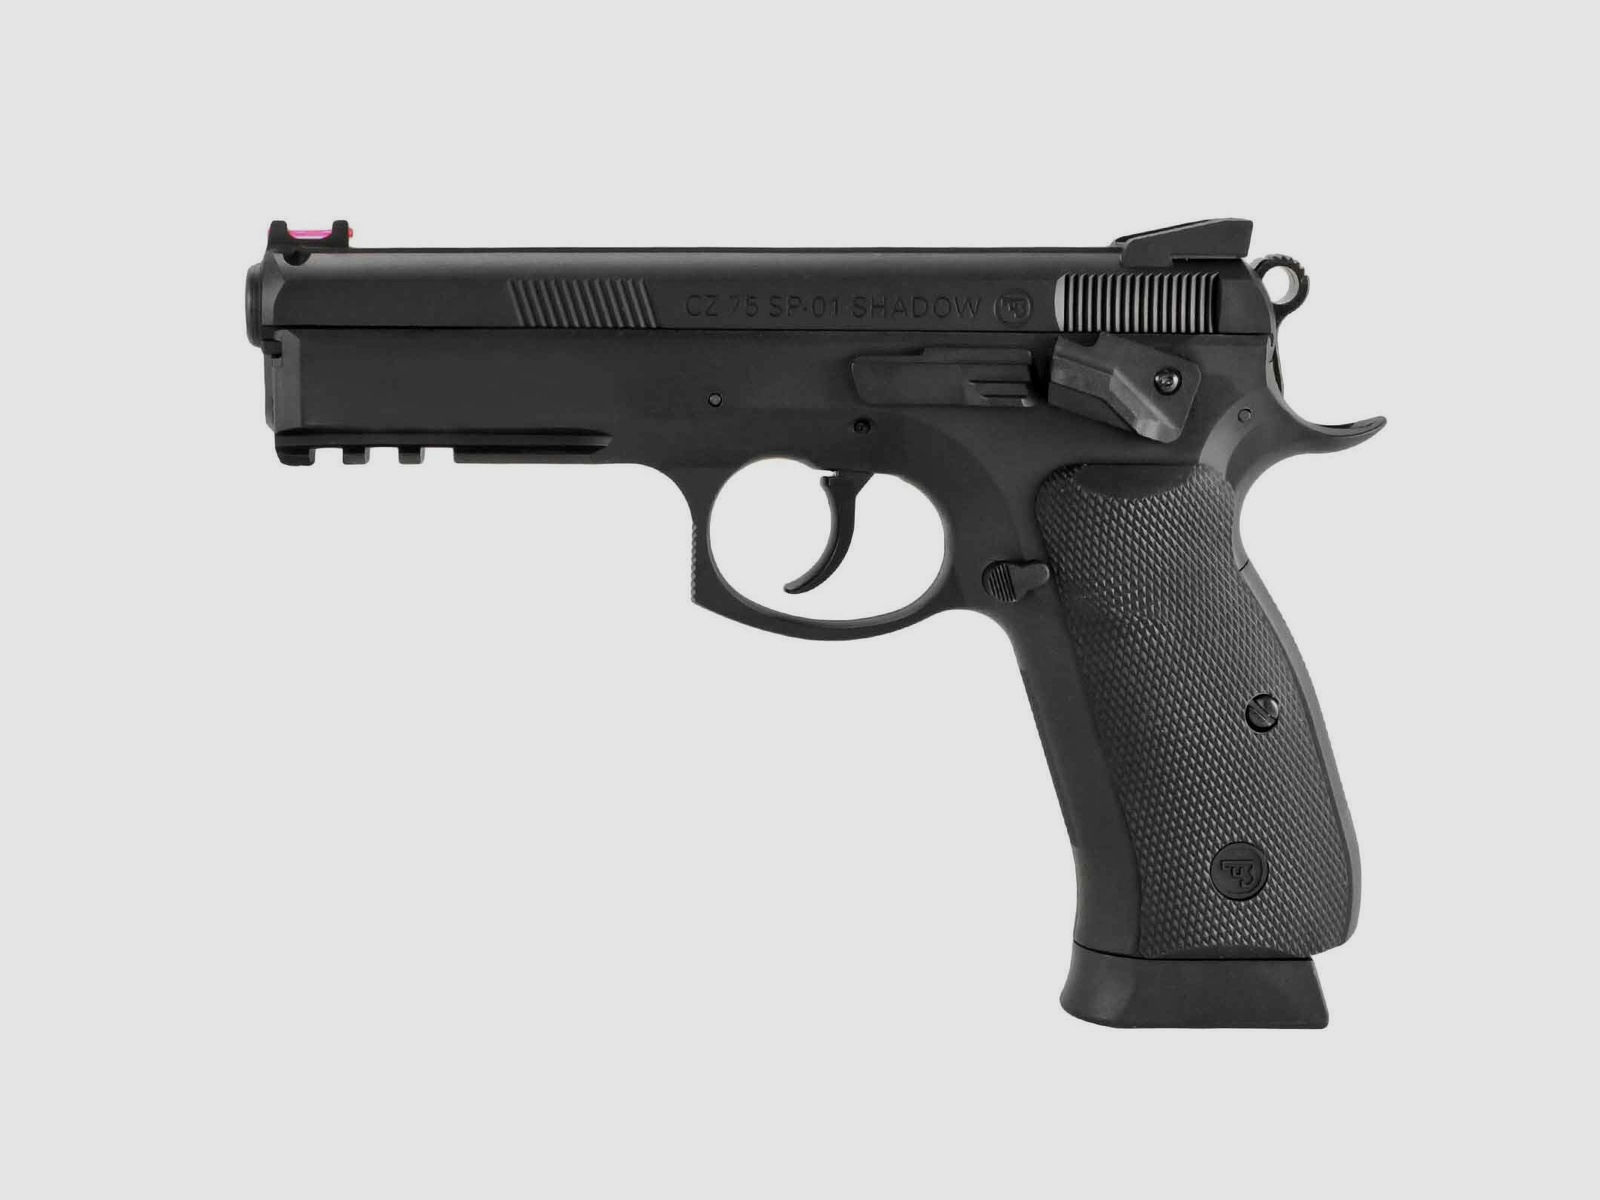 Komplettset CZ SP-01 Shadow Co2-Pistole Kaliber 4,5 mm Stahl BB (P18) + 10 Co2-Kapseln Umarex + 1500 Stahl-BB's Umarex